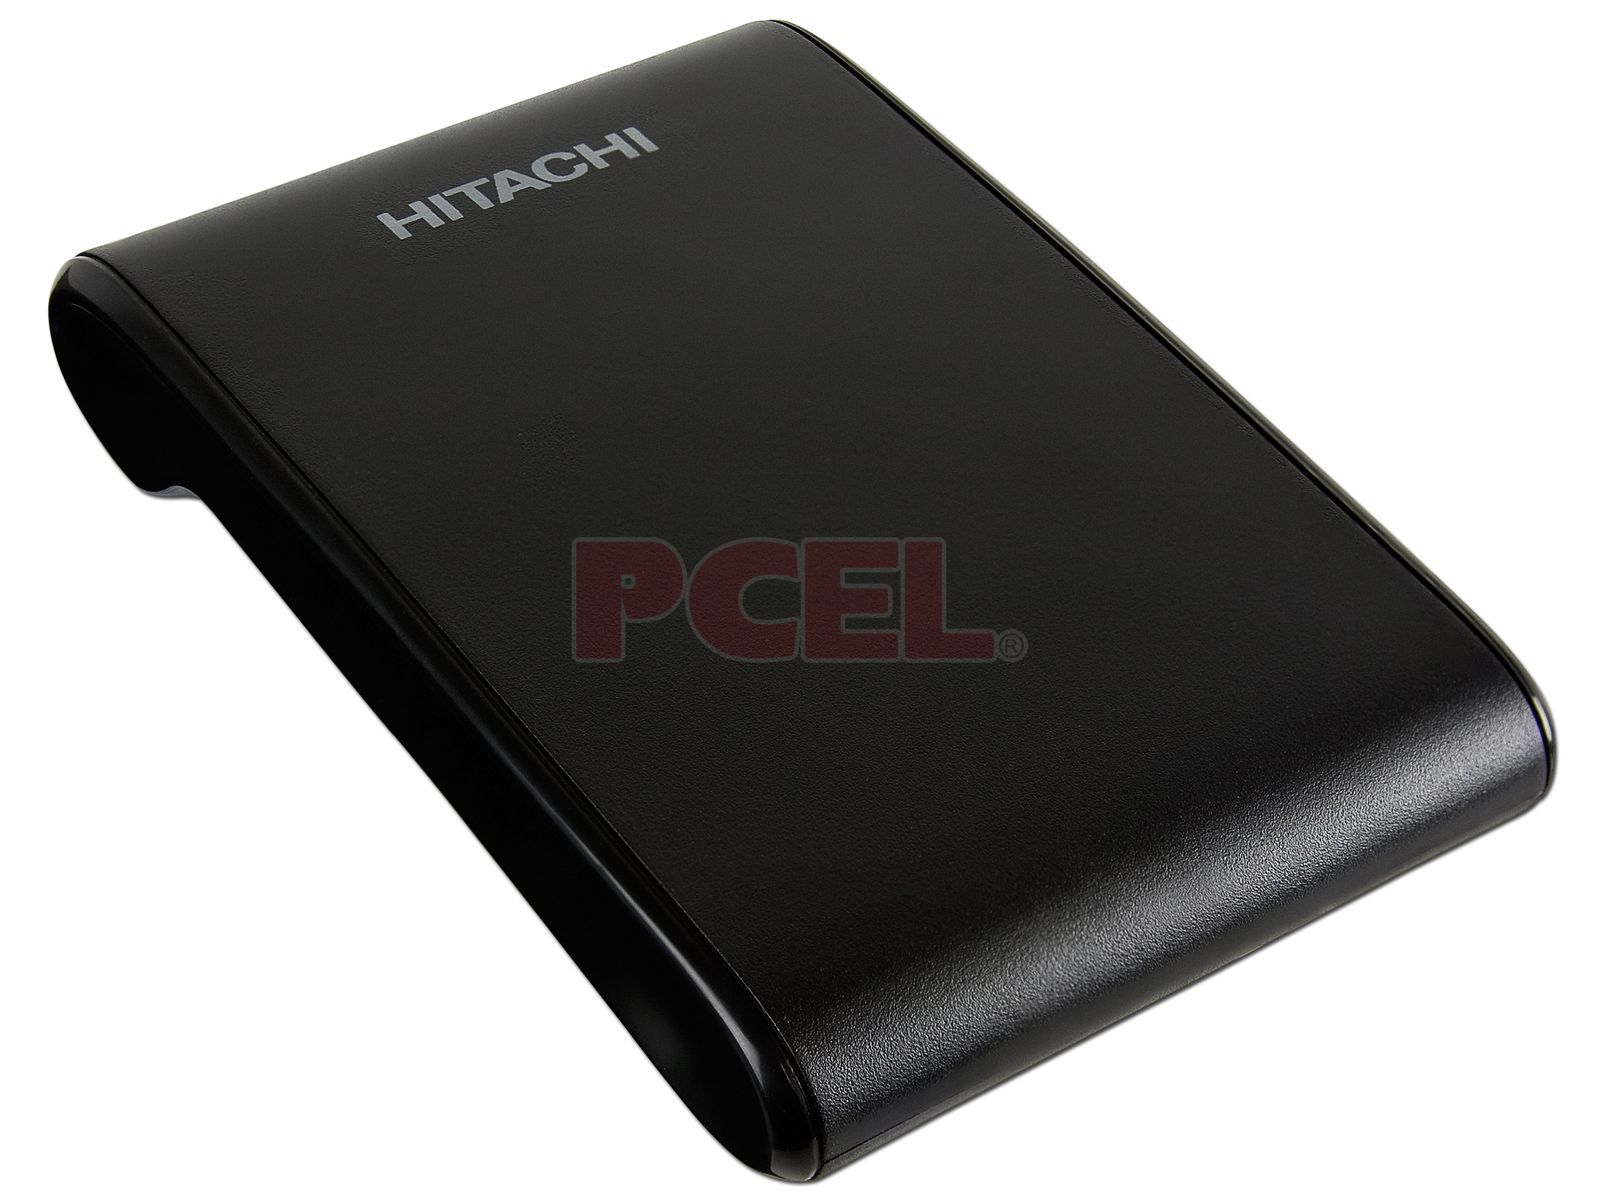 Disco Duro Portable Hitachi de 500GB, 2.0. Color Negro